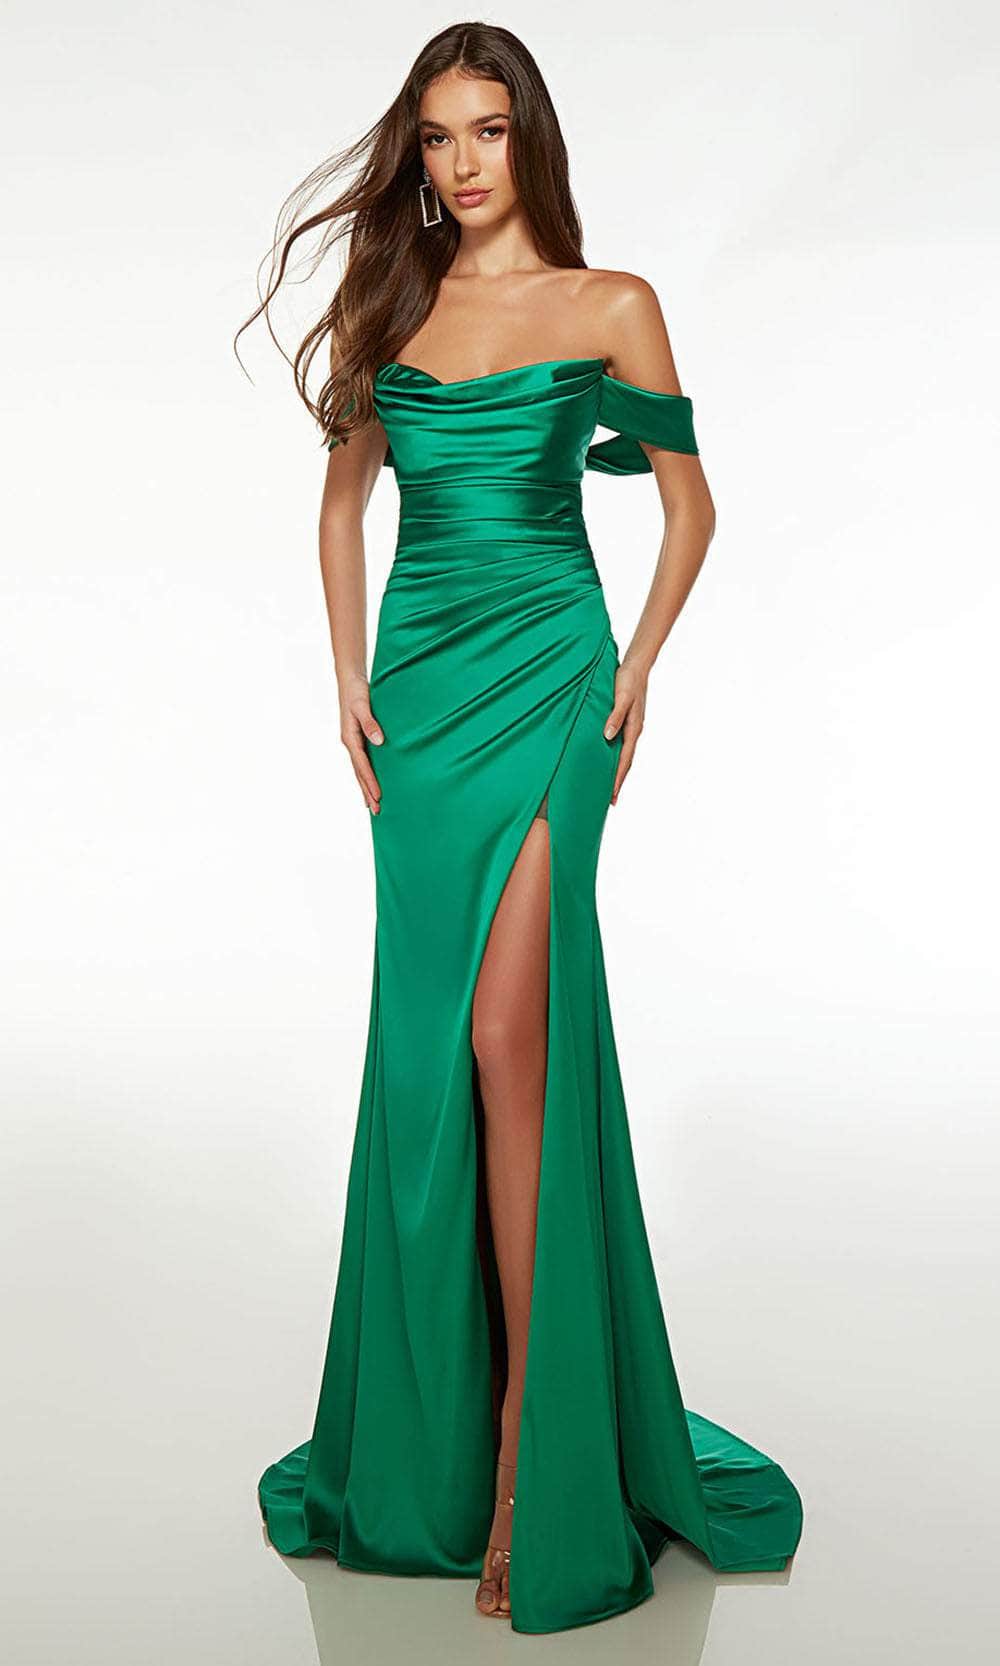 Alyce Paris 61571 - Satin Mermaid Prom Dress Special Occasion Dresses